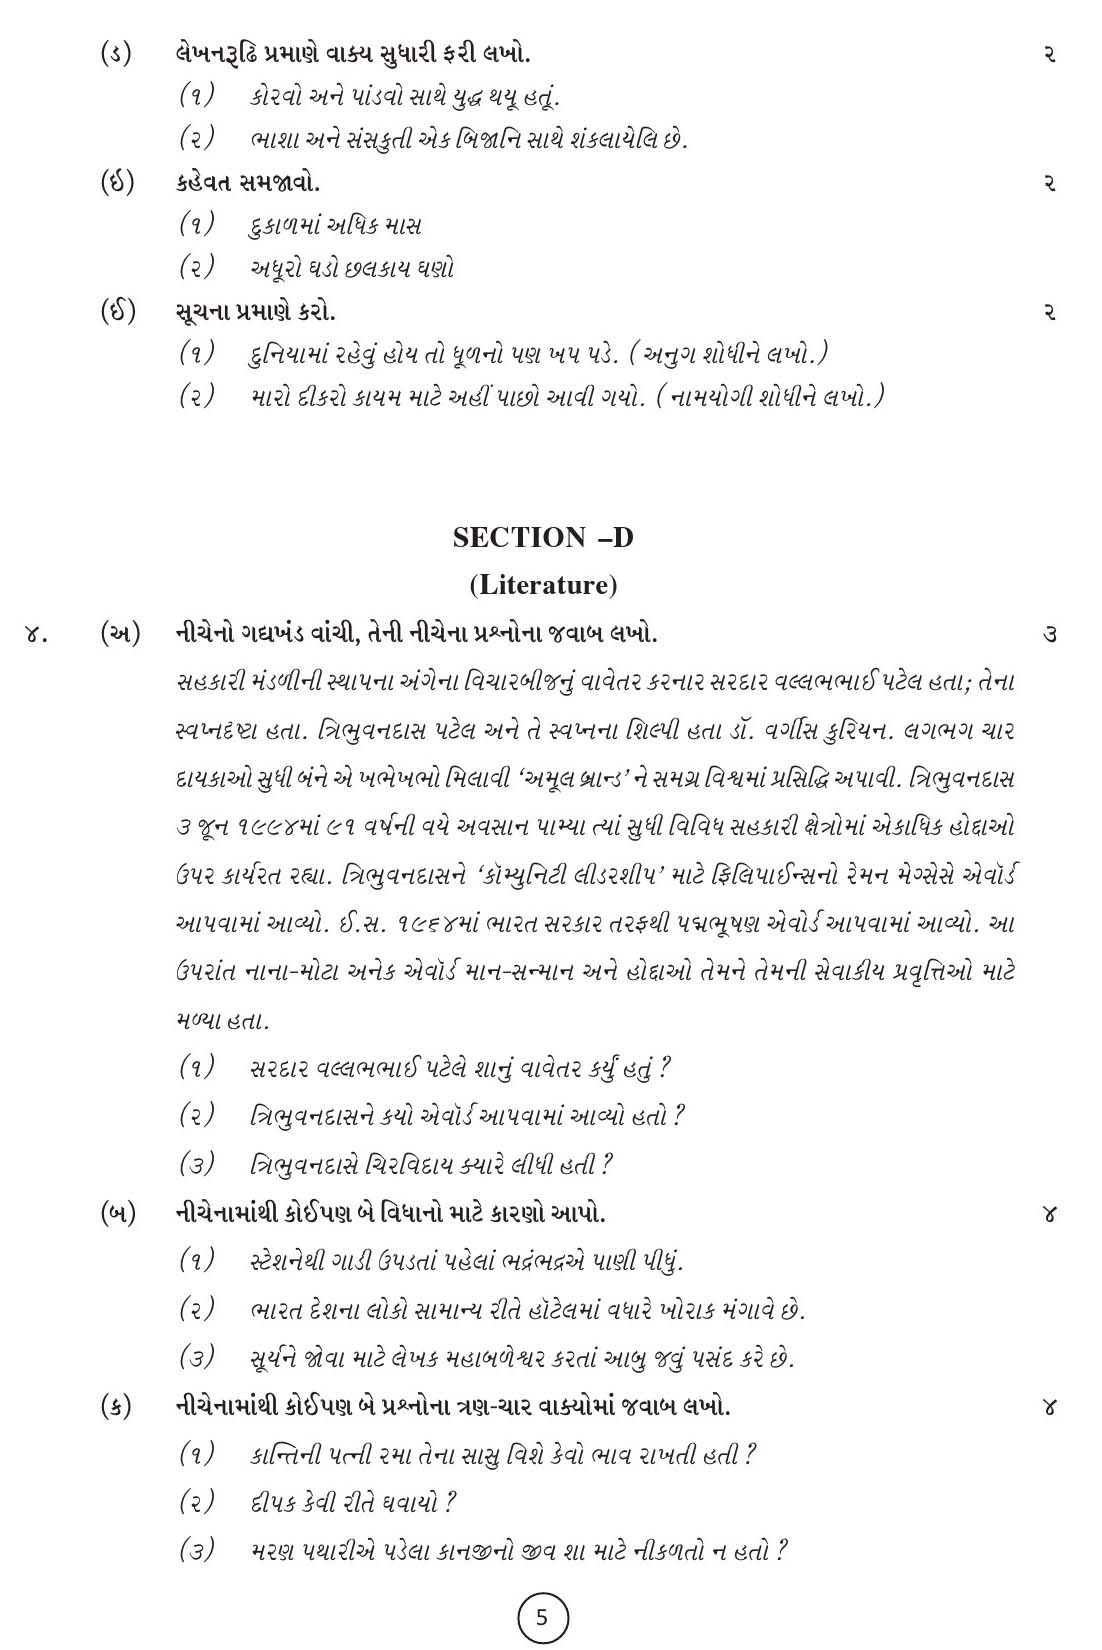 Gujarati CBSE Class X Sample Question Paper 2018-19 - Image 5